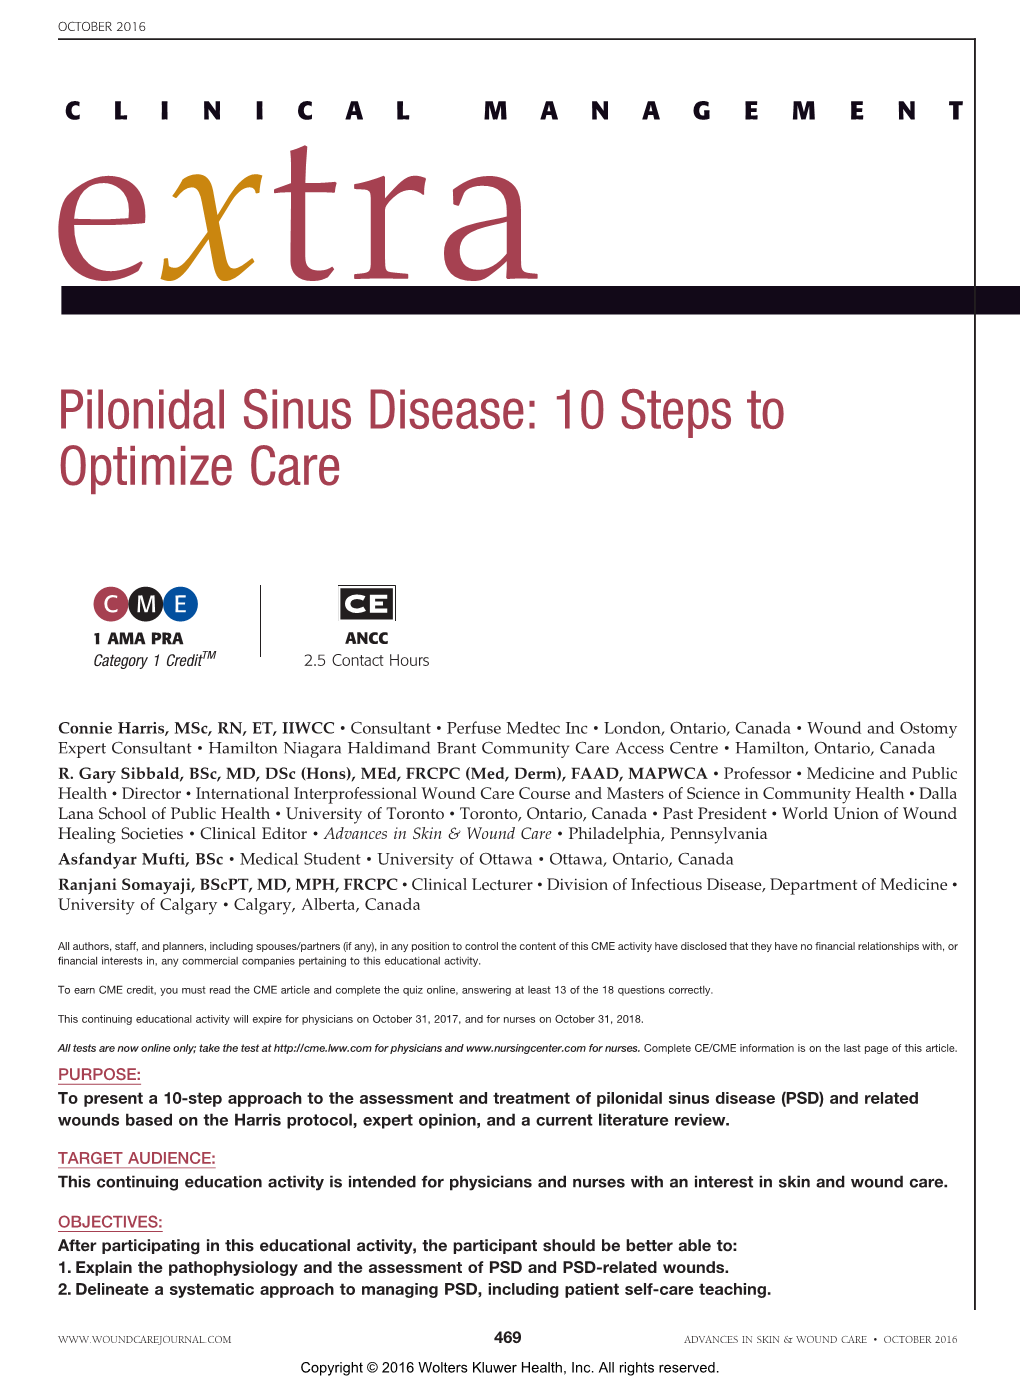 Pilonidal Sinus Disease: 10 Steps to Optimize Care